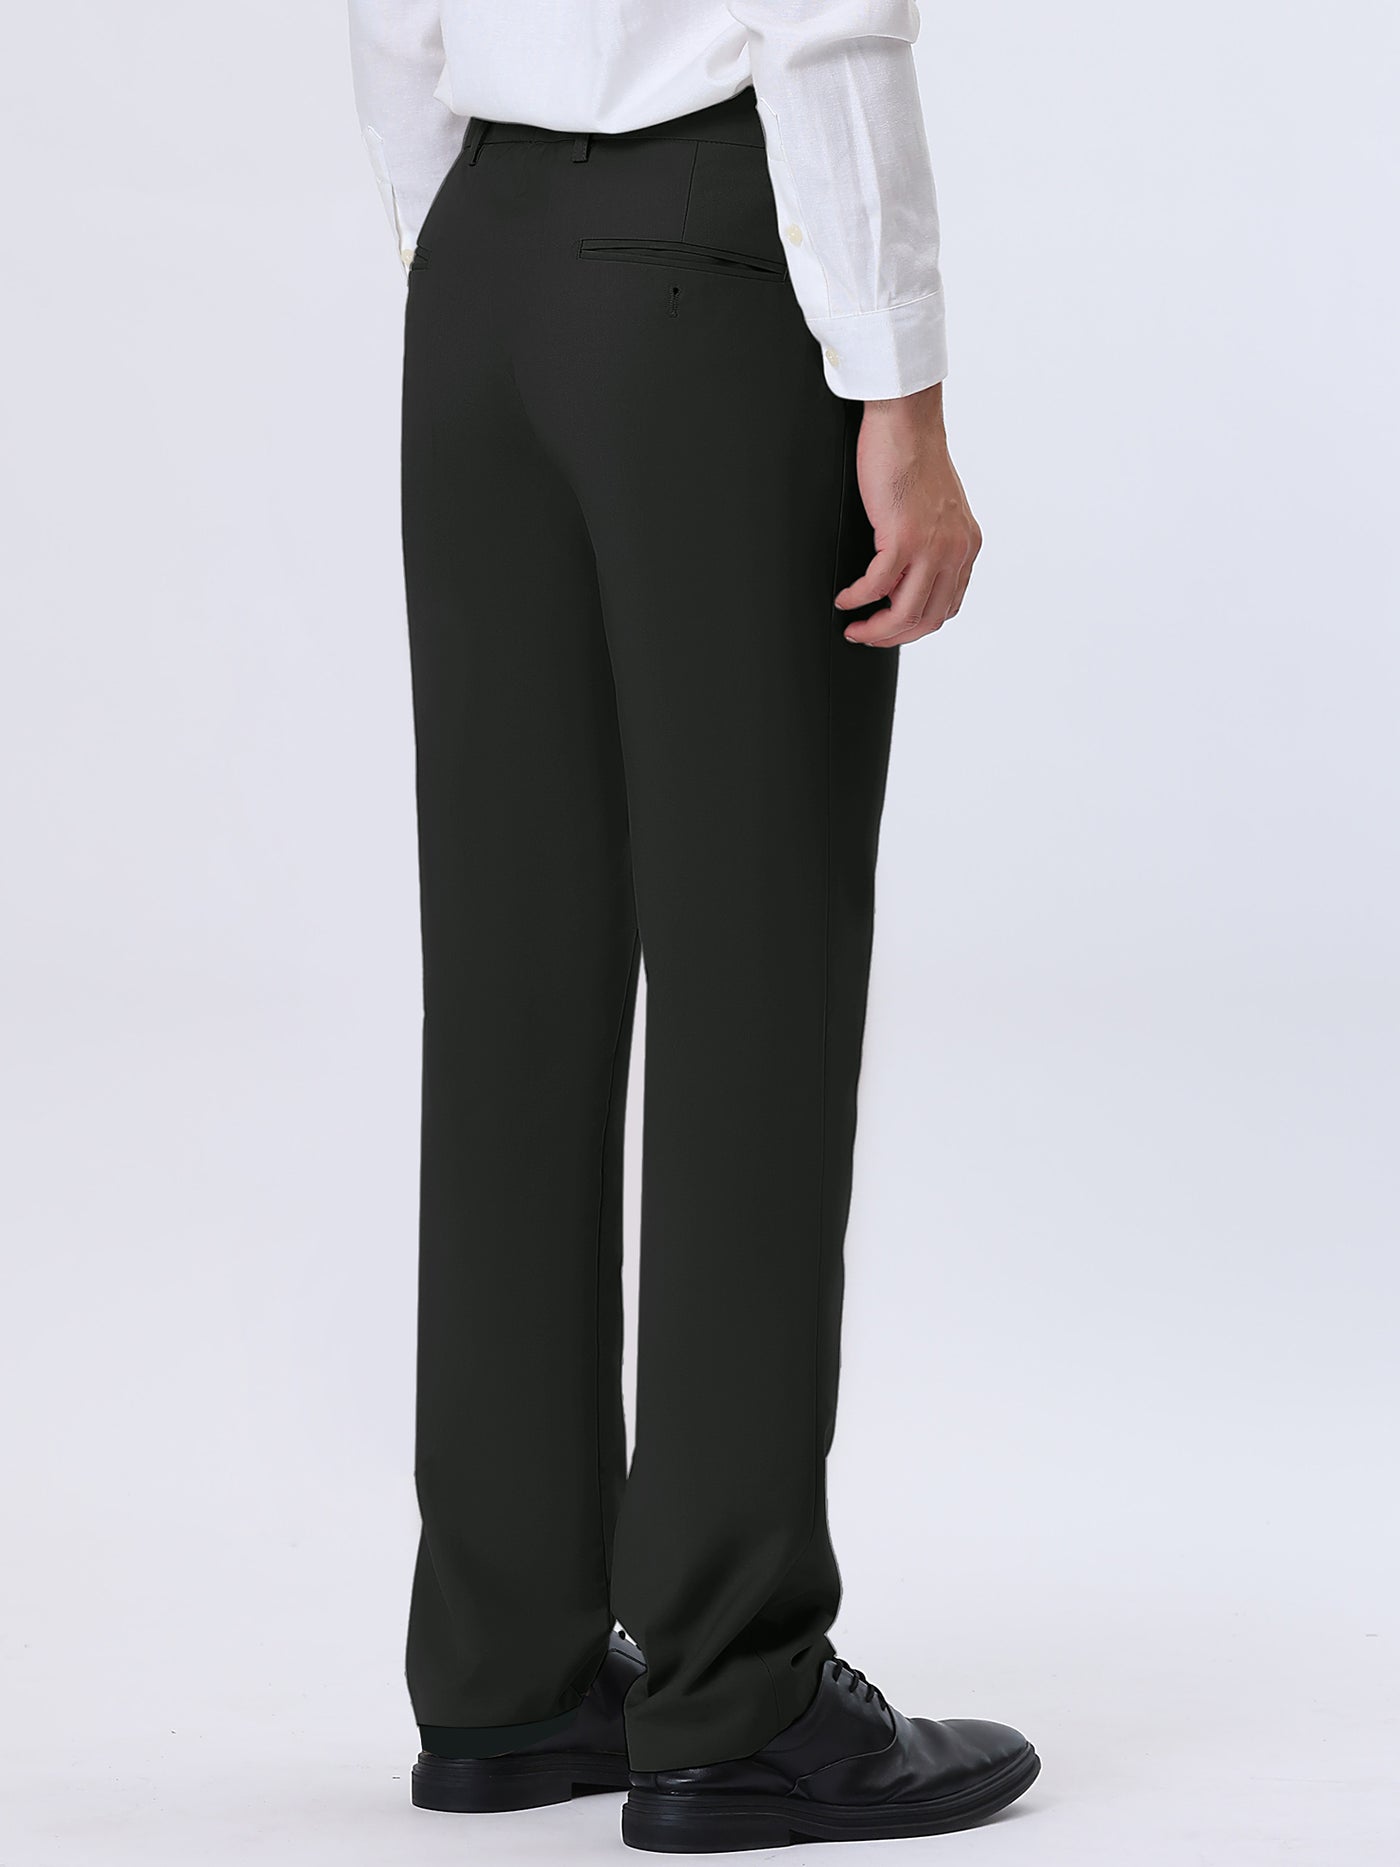 Bublédon Men's Flat Front Dress Pants Comfort Formal Straight Fit Trousers